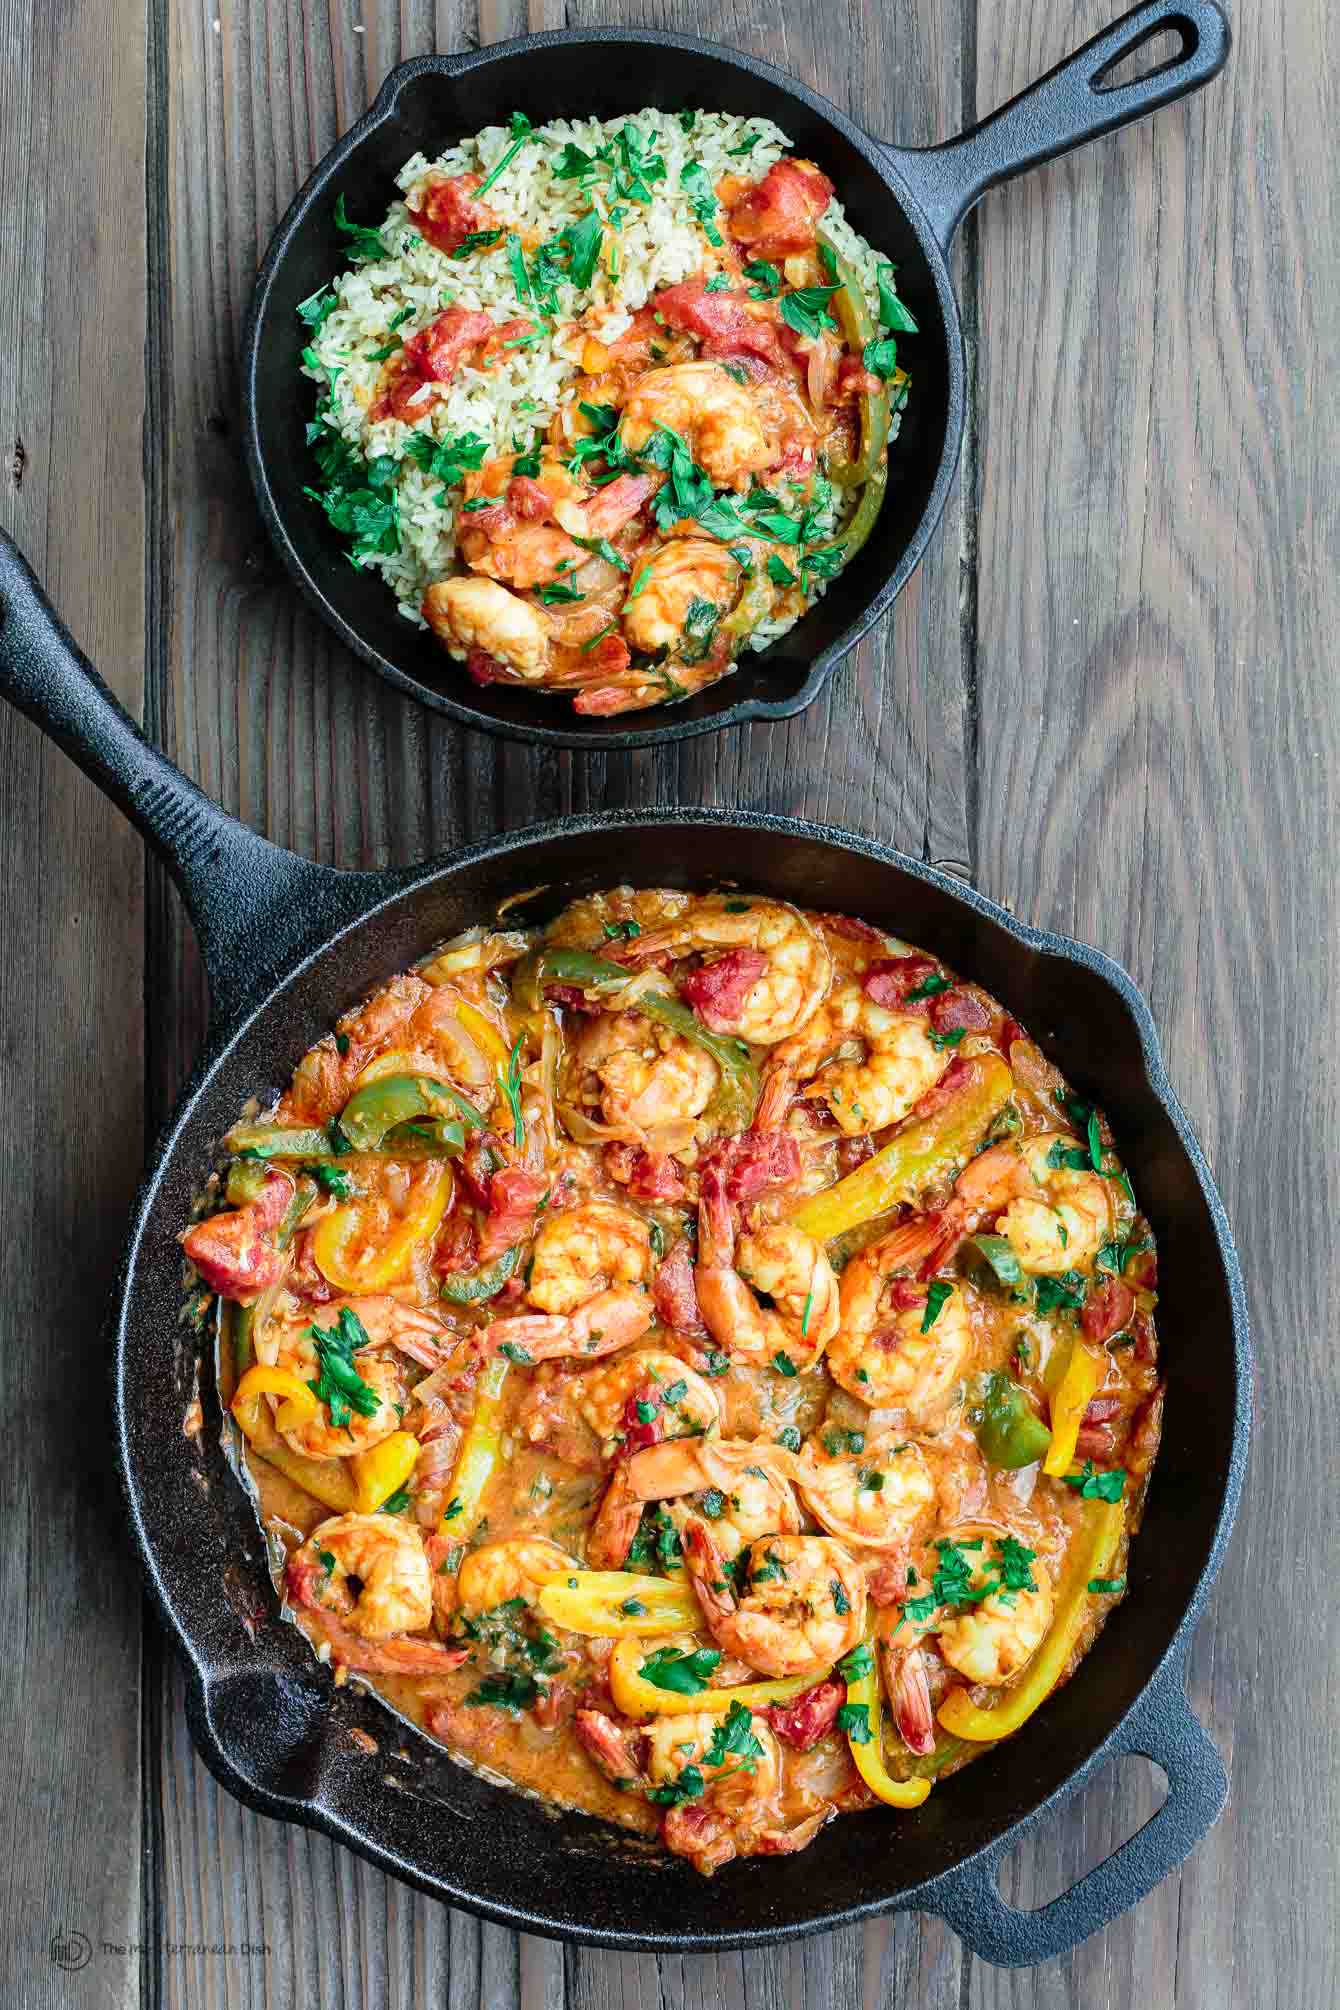 https://www.themediterraneandish.com/wp-content/uploads/2017/04/Easy-Shrimp-Recipe-The-Mediterranean-Dish-2.jpg